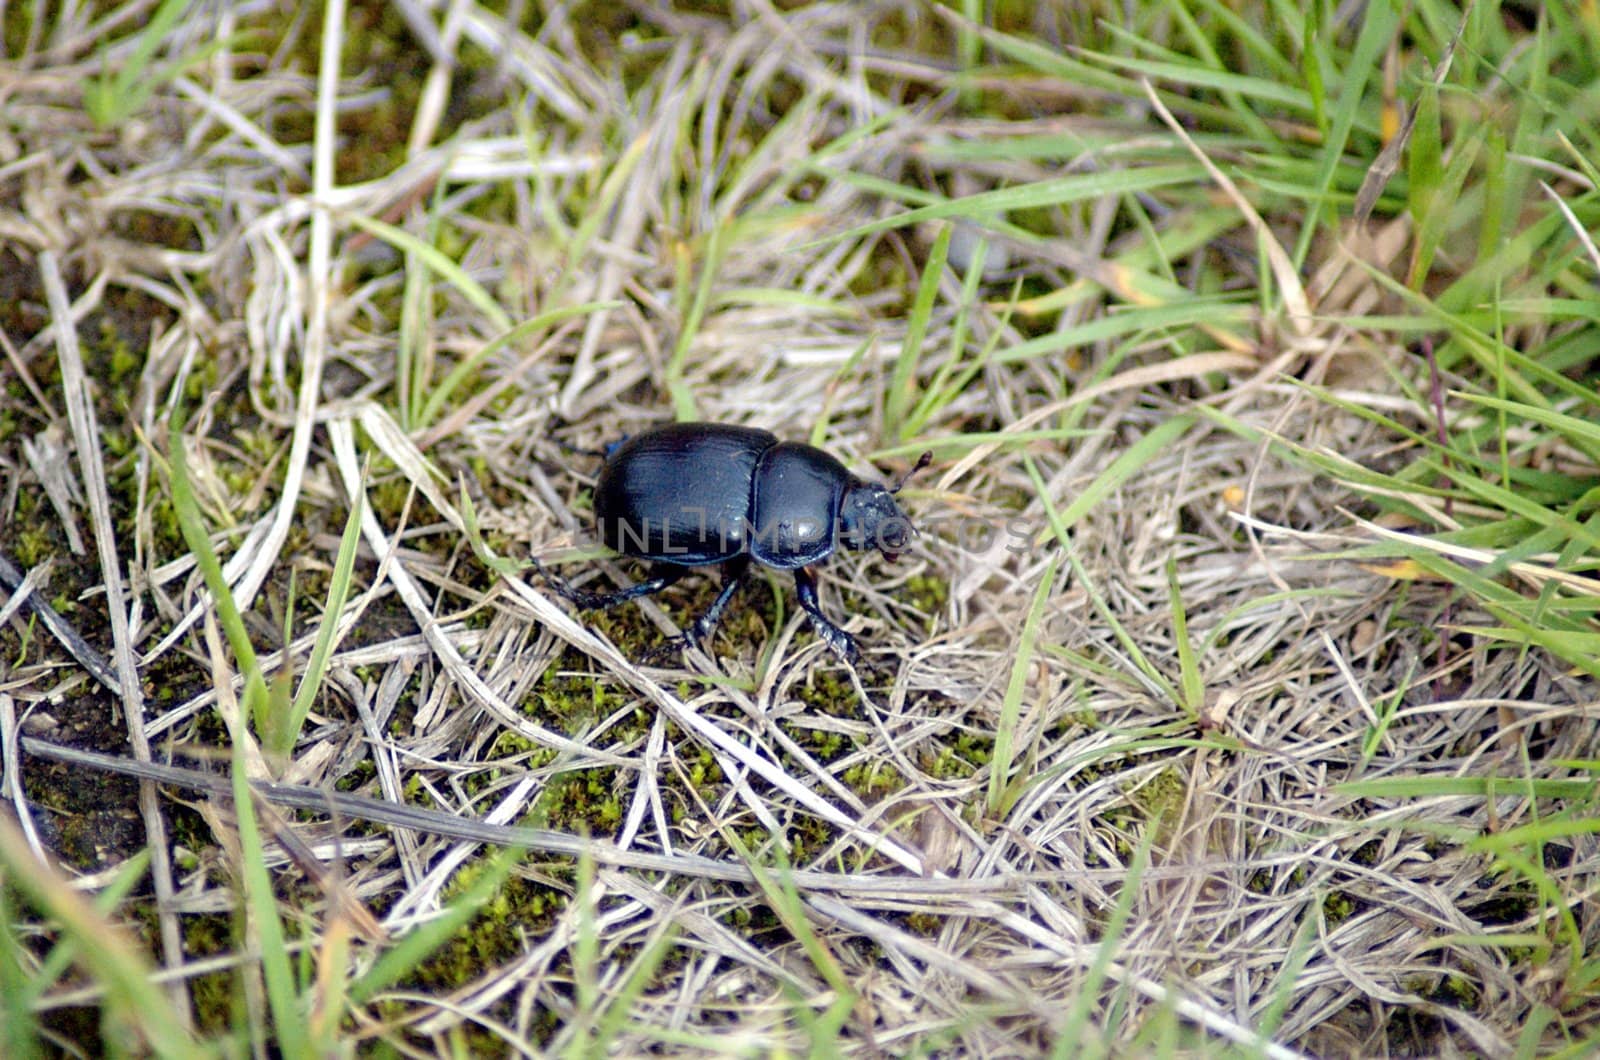 Black beetle trotting along on forest ground